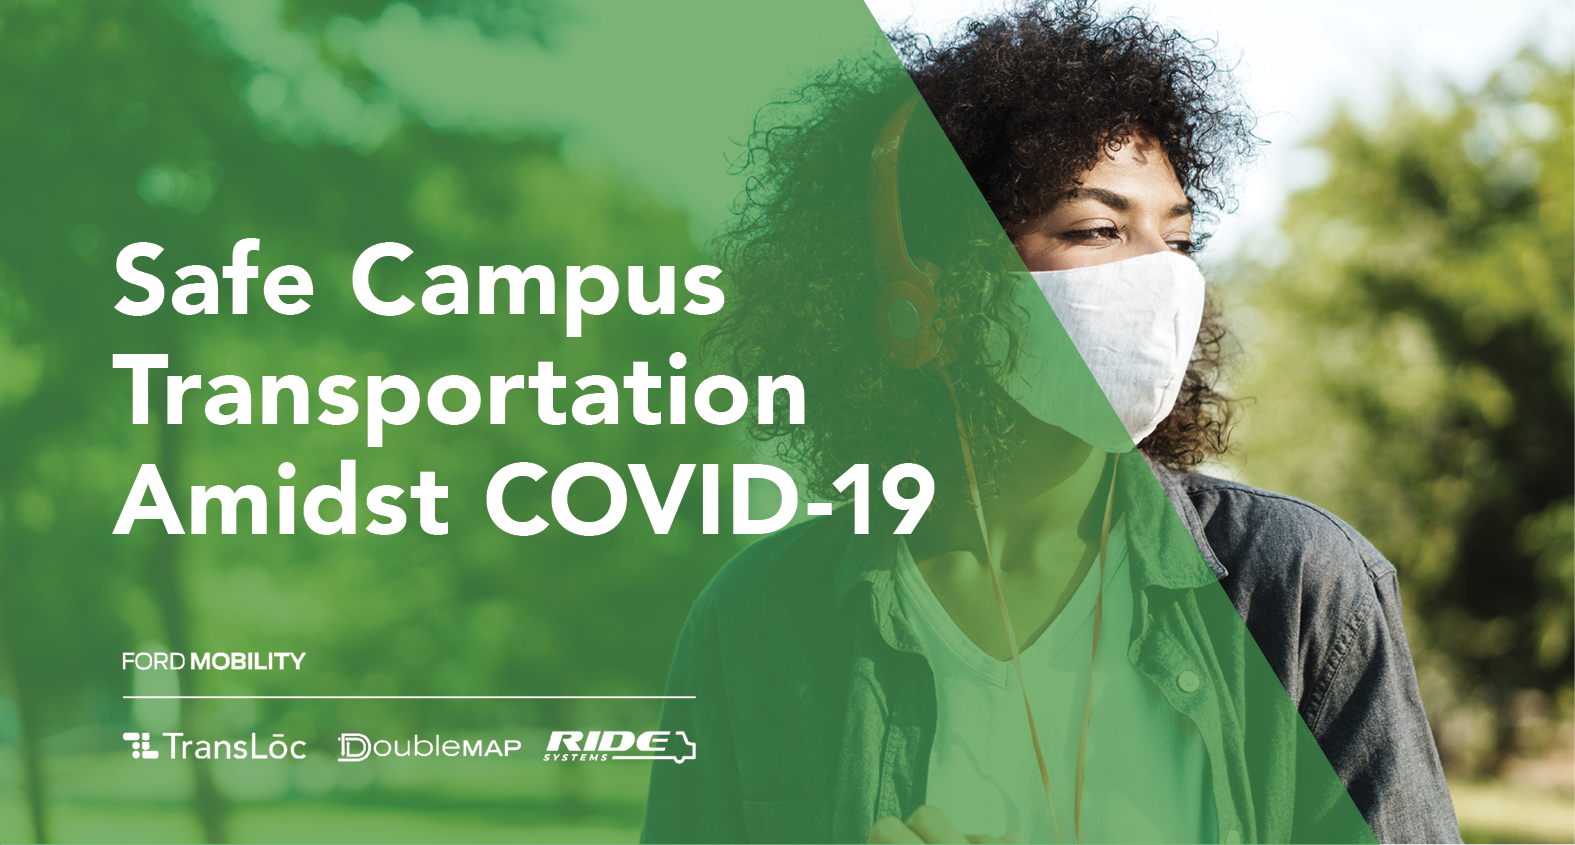 Safe Campus Transportation Amidst Covid-19